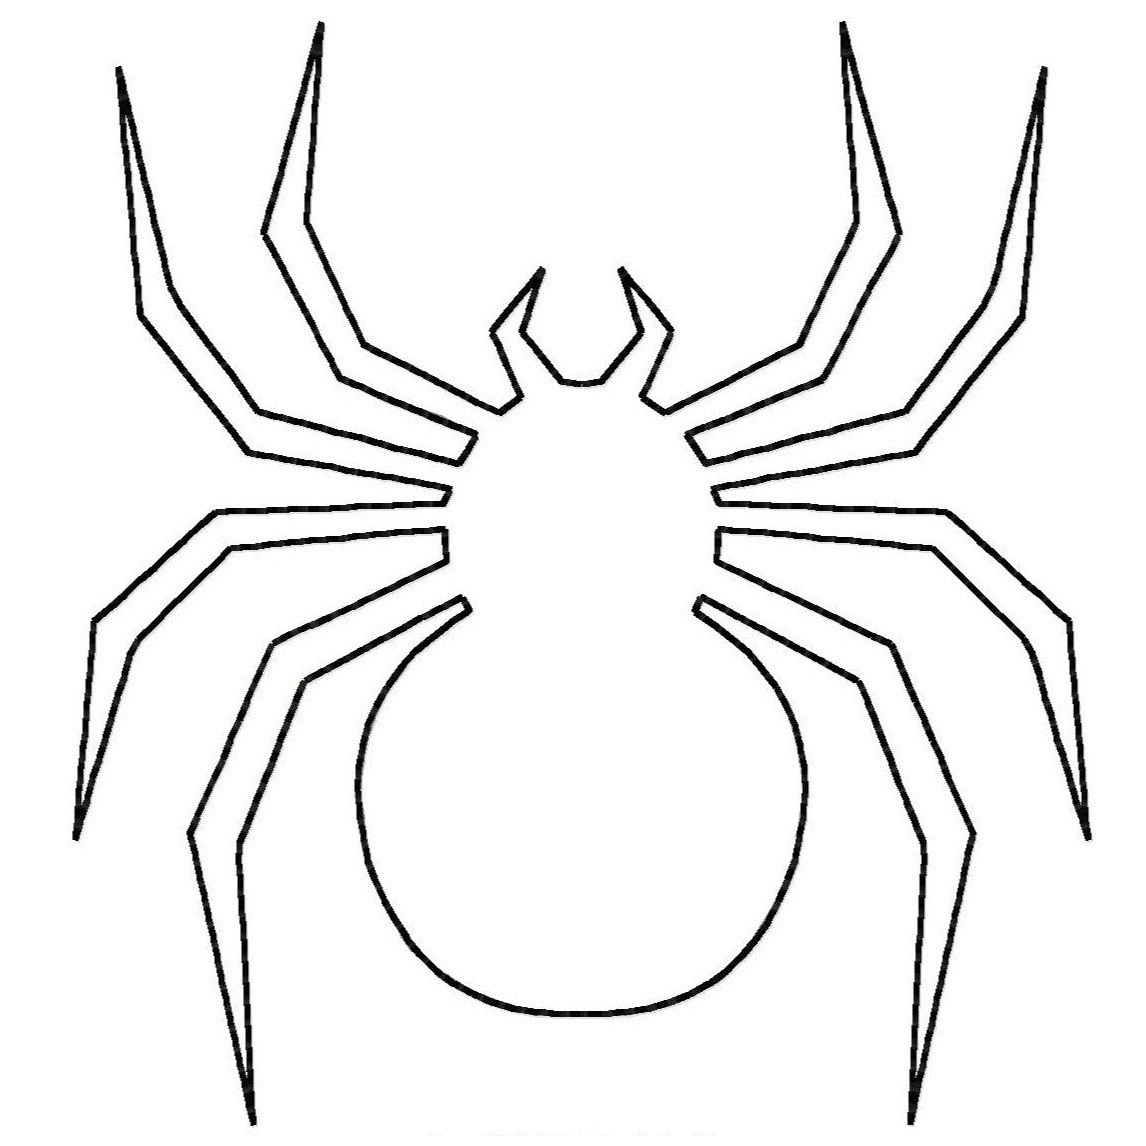 7 Best Images of Spiders For Halloween Printable - Halloween ...